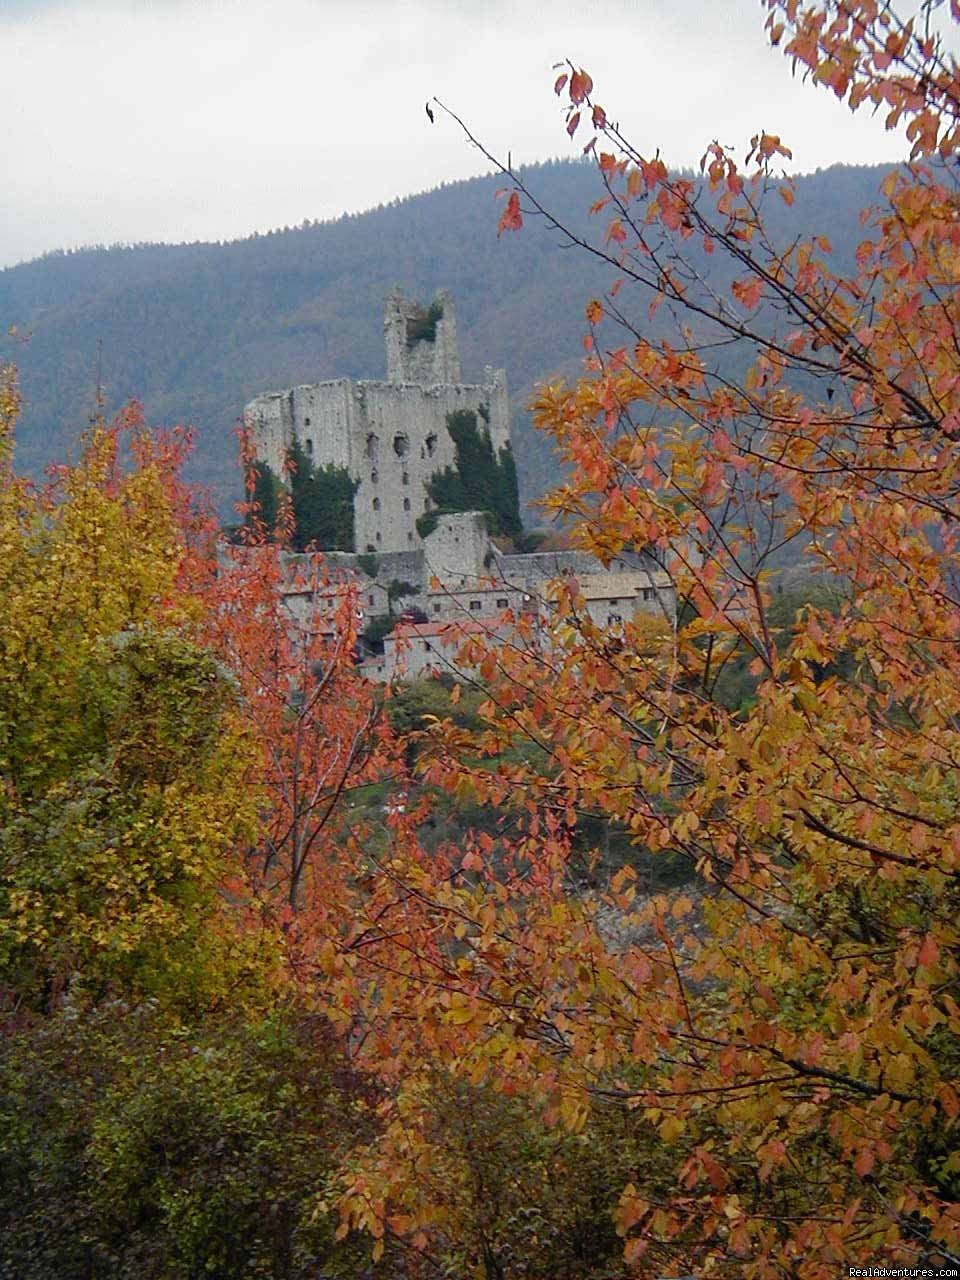 Pierle Castle, 8 miles away | Mountain Bike from your front door in Umbria! | Image #11/15 | 